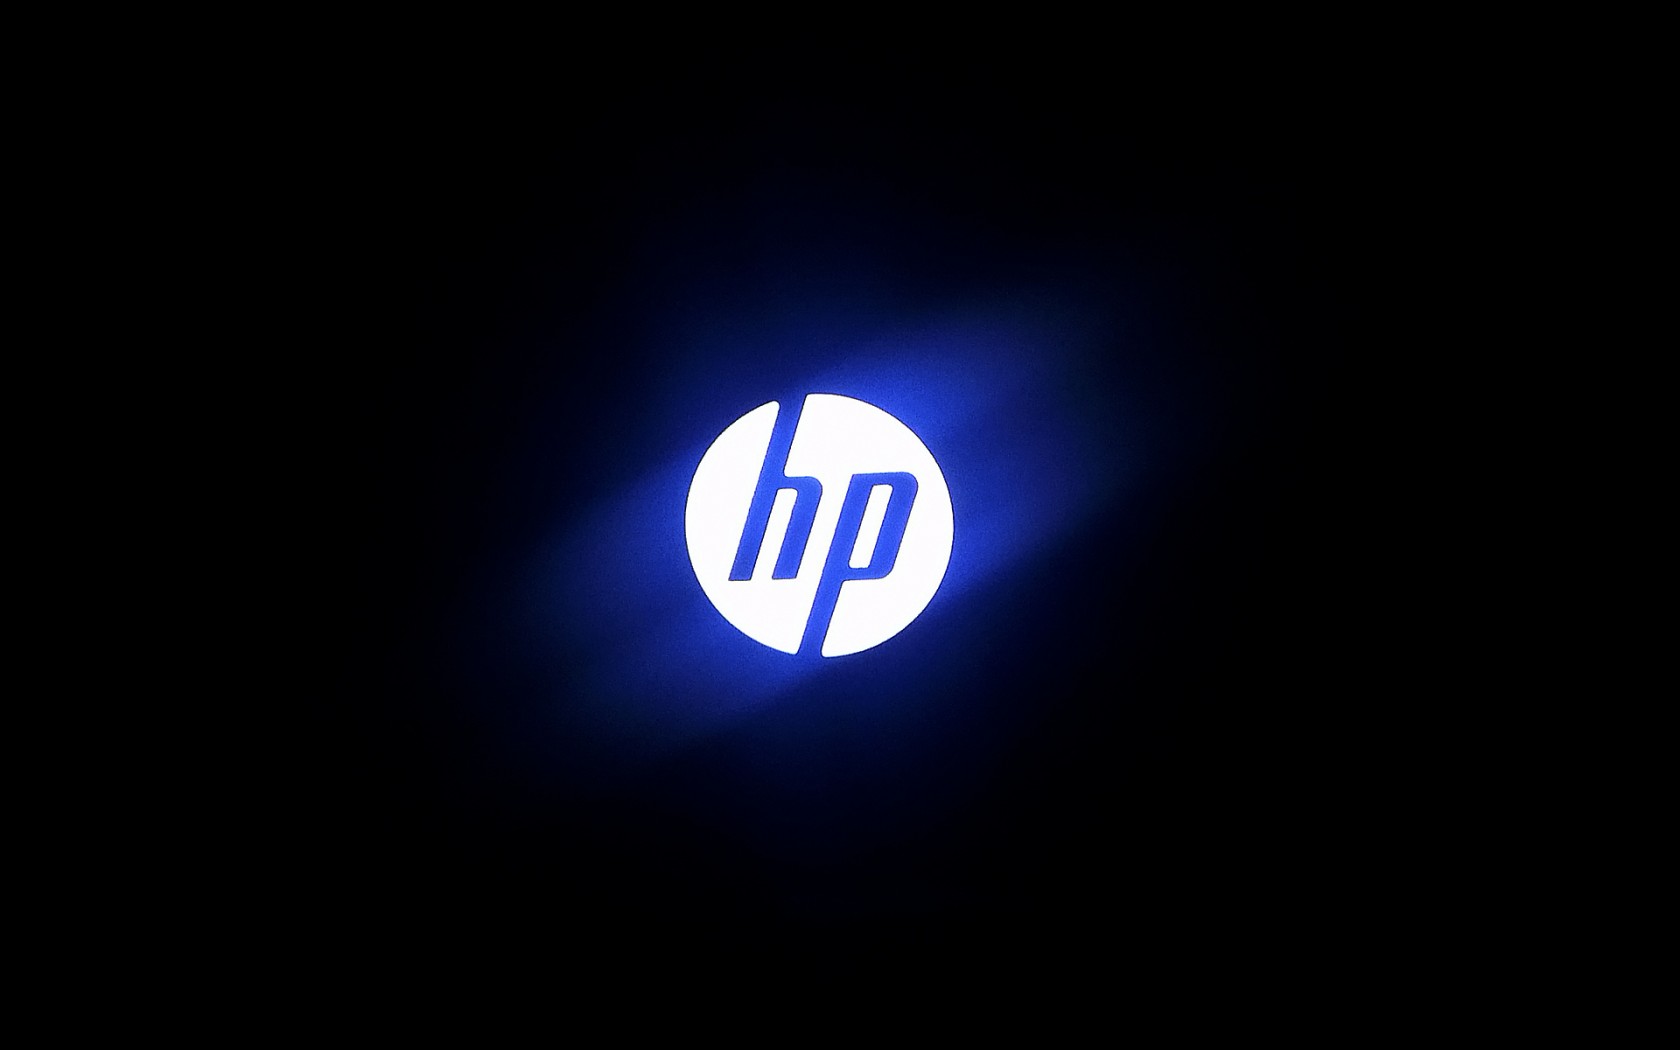 Wallpaper HP Logo Laptops Black Wallpaper Desktop And Mobile HD